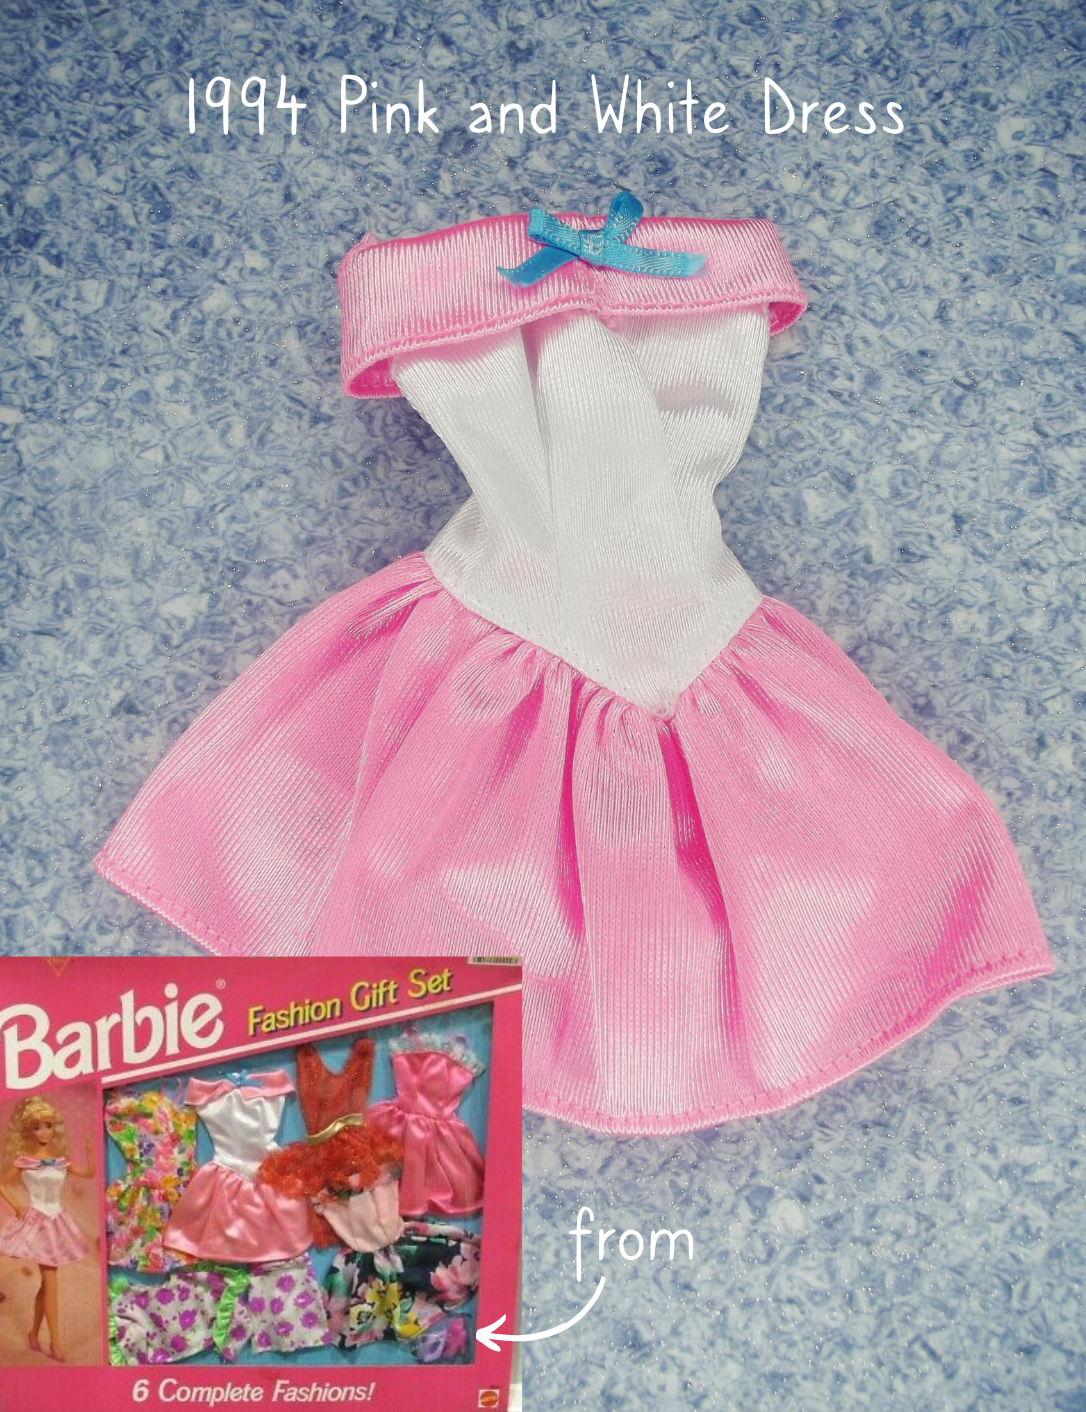 1994 Barbie Fashion Gift Set Pink and White Dress